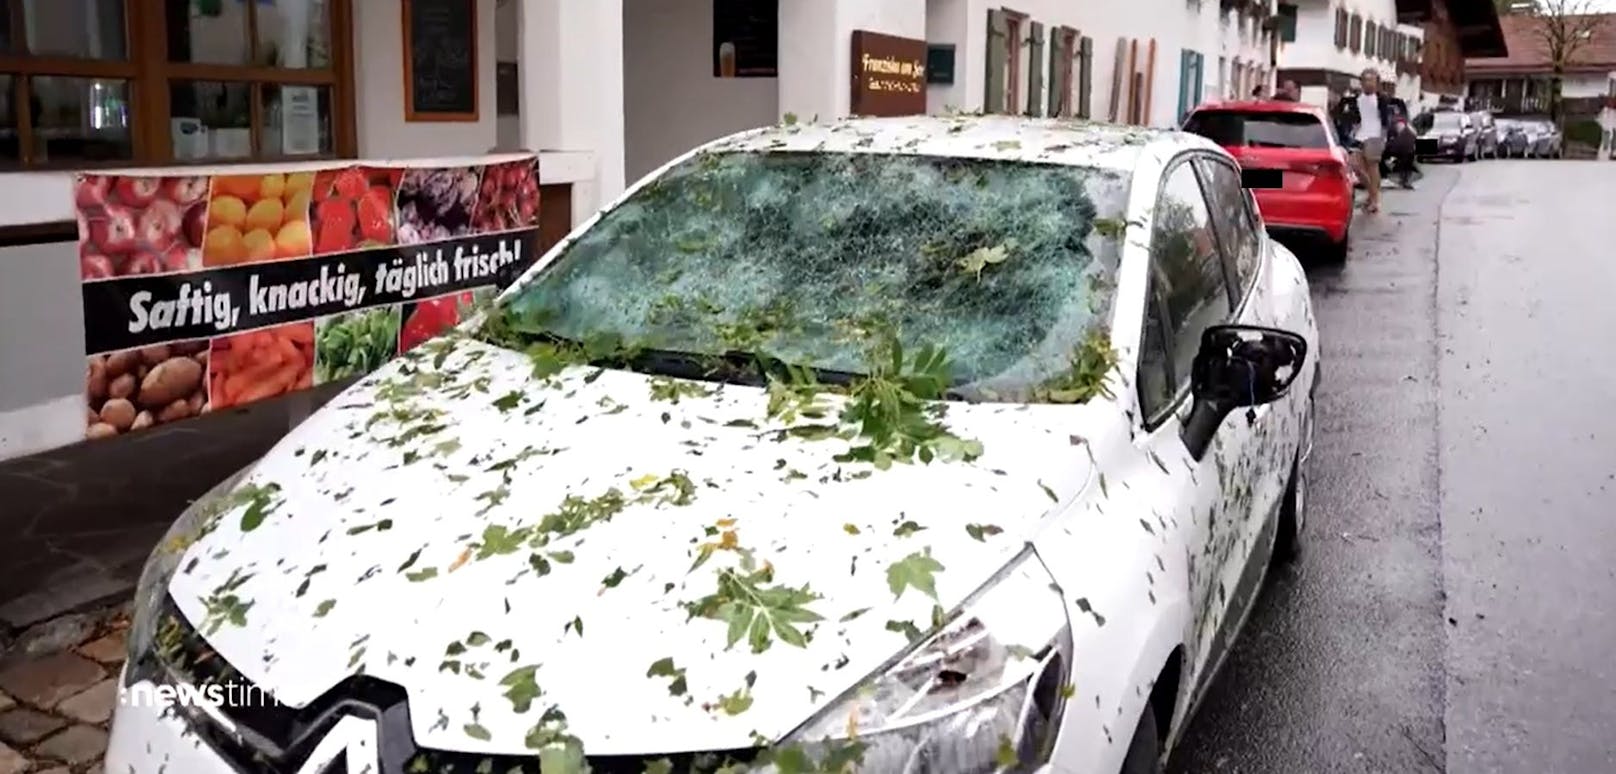 "Wie im Krieg" – Hagelsturm verwüstet Hunderte Autos